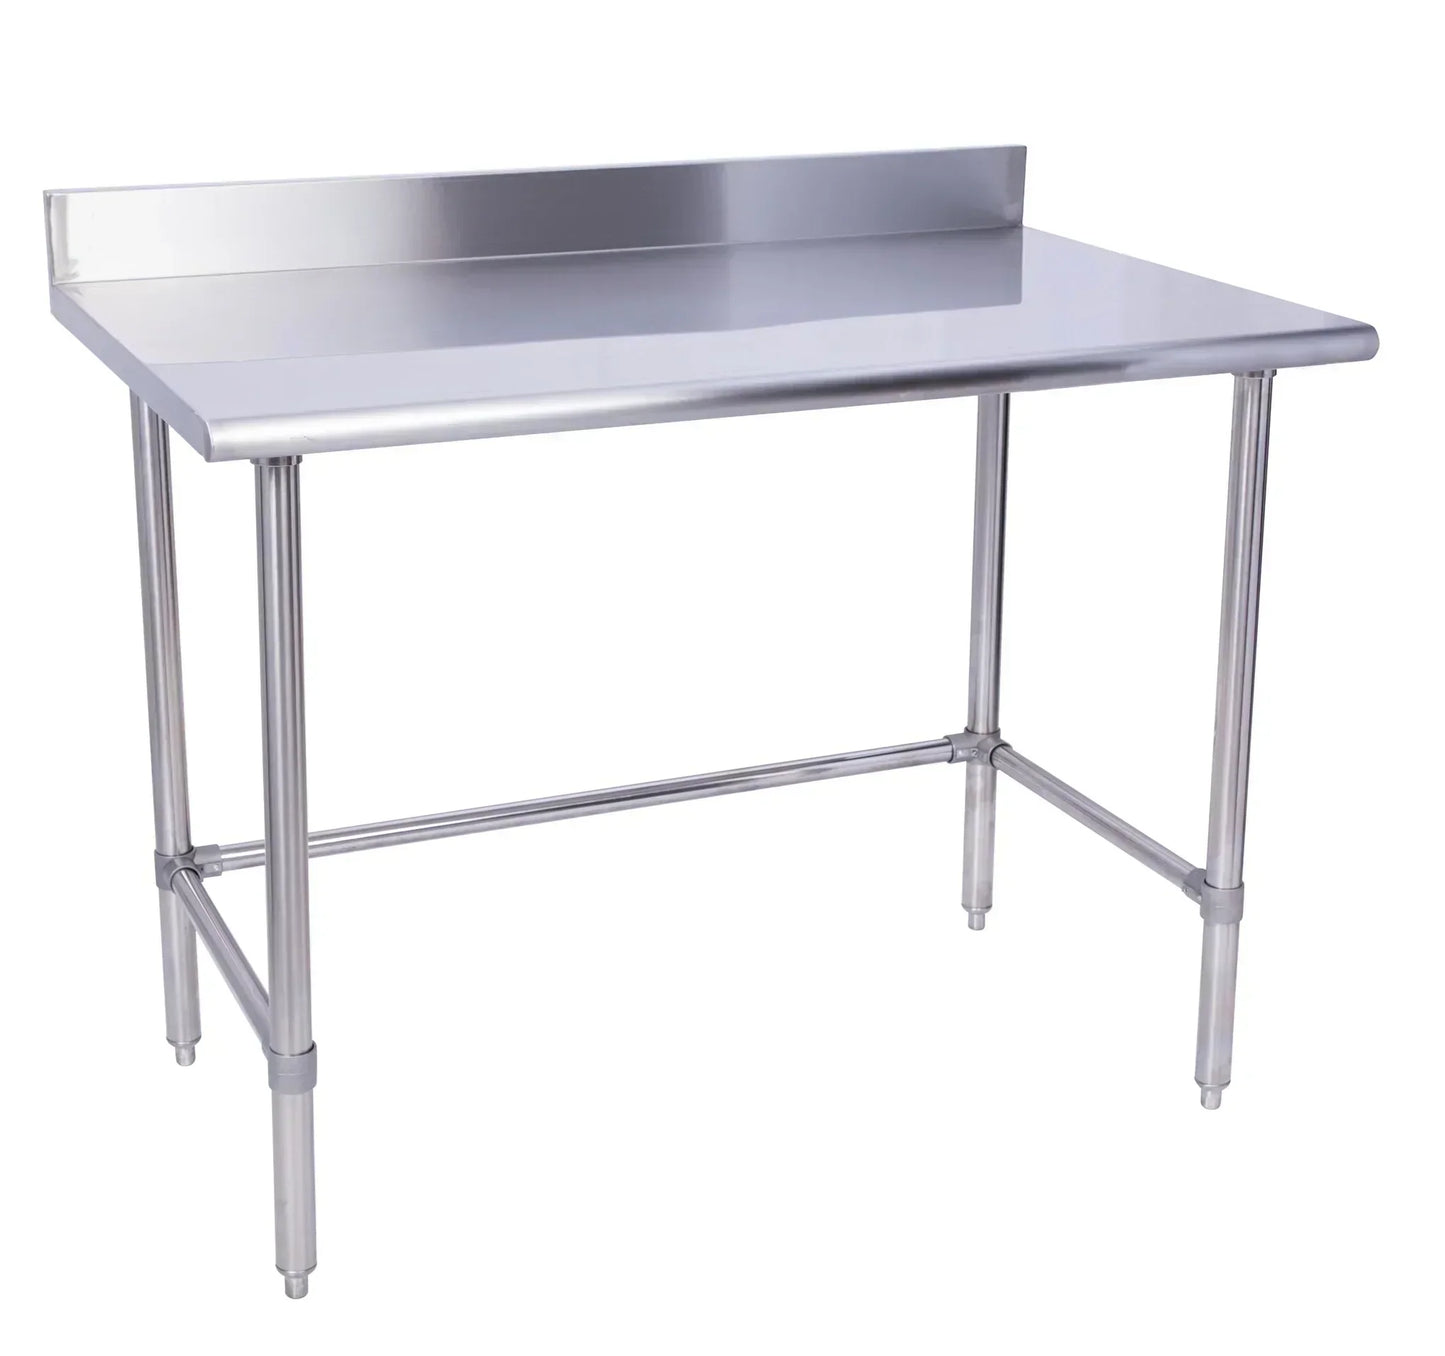 KCS WSCB-3072-B 30" x 72" Stainless Steel Work Table With Cross Bar & 4" Backsplash